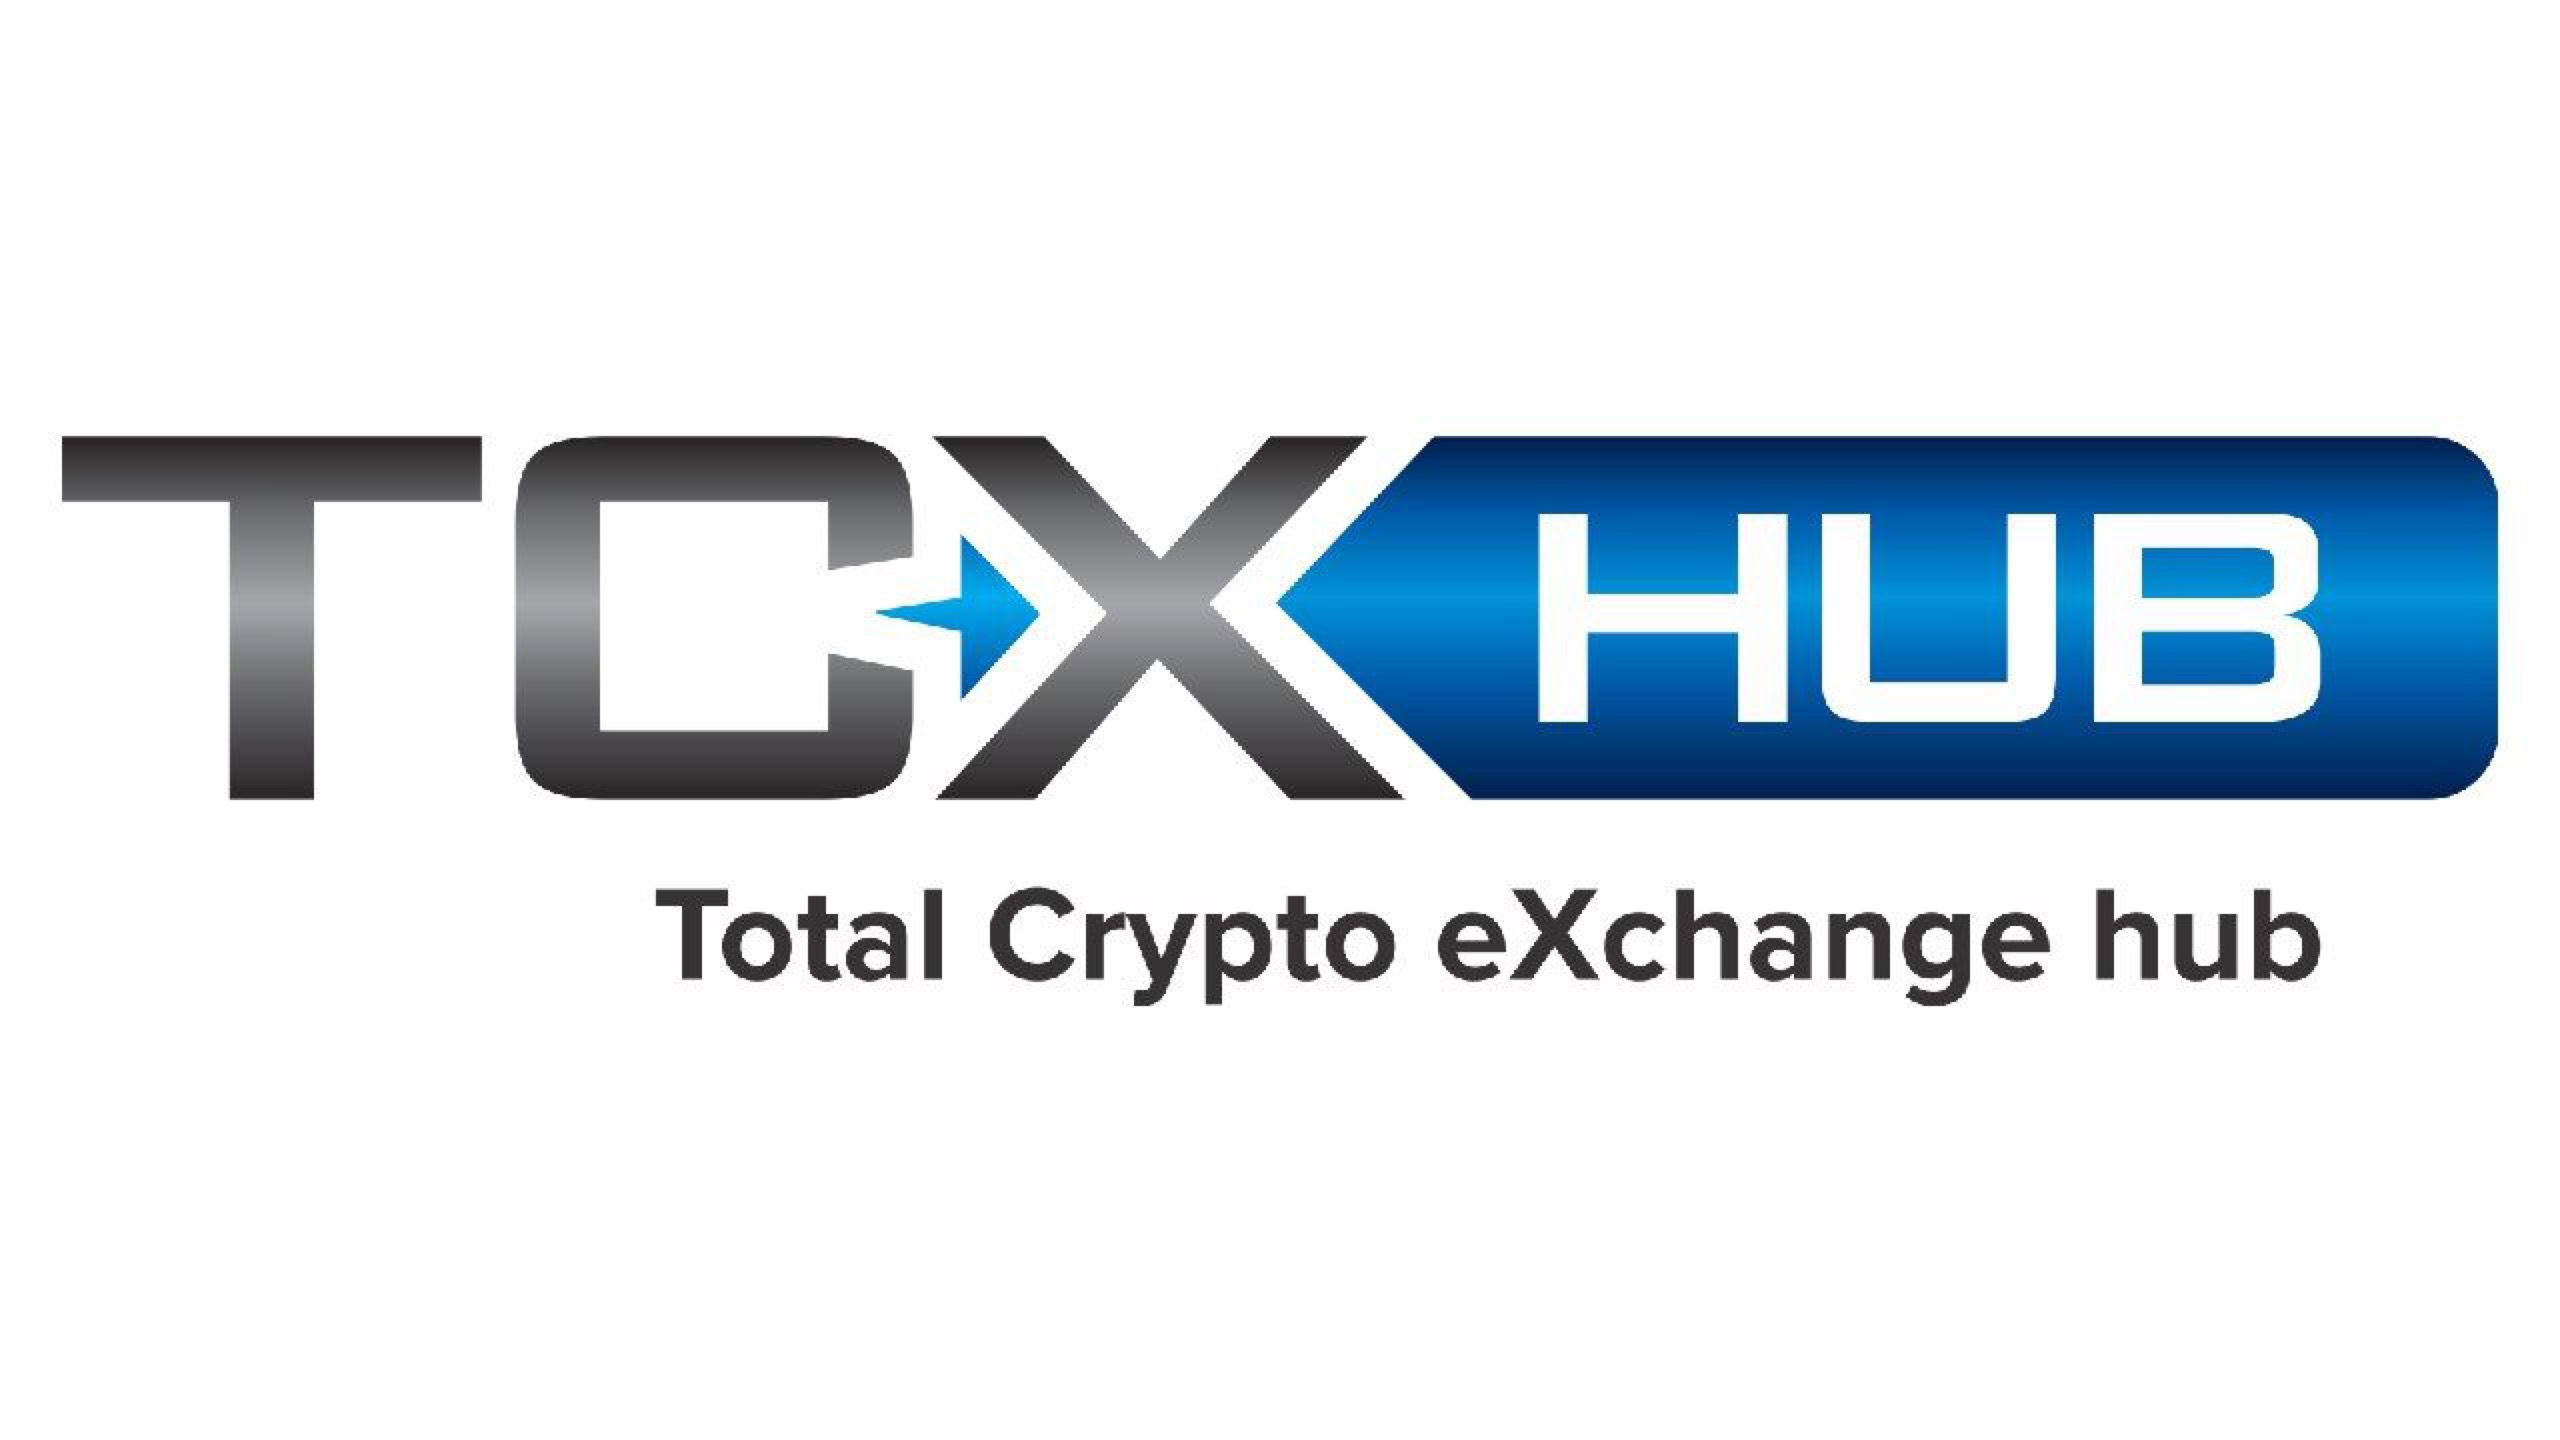 Total Crypto eXchange hub